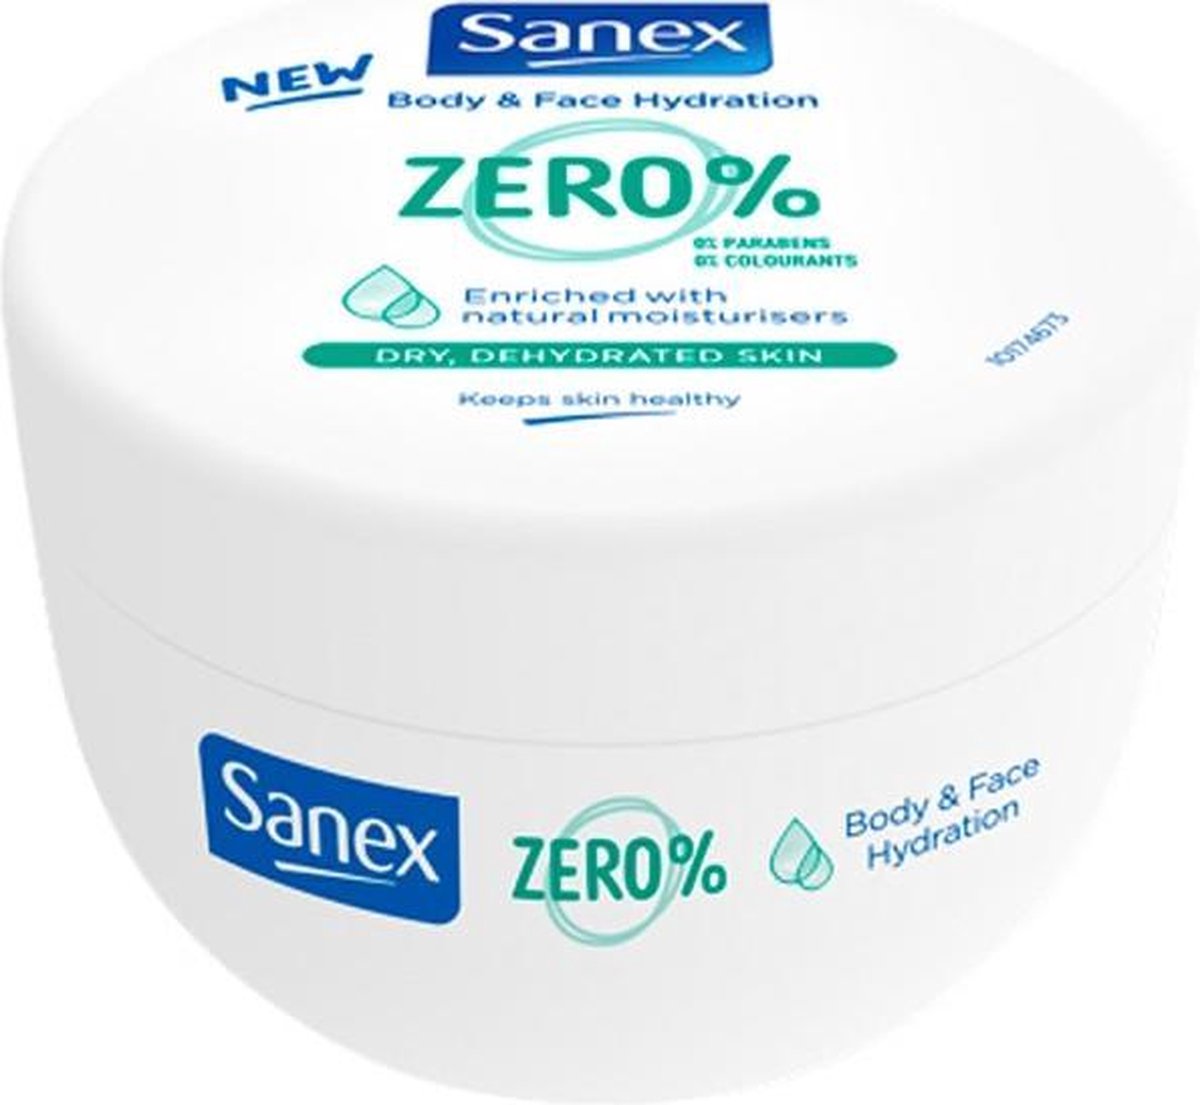 Sanex Zero Body & Face Hydratation Dry & Dehidrated Skin 250ml